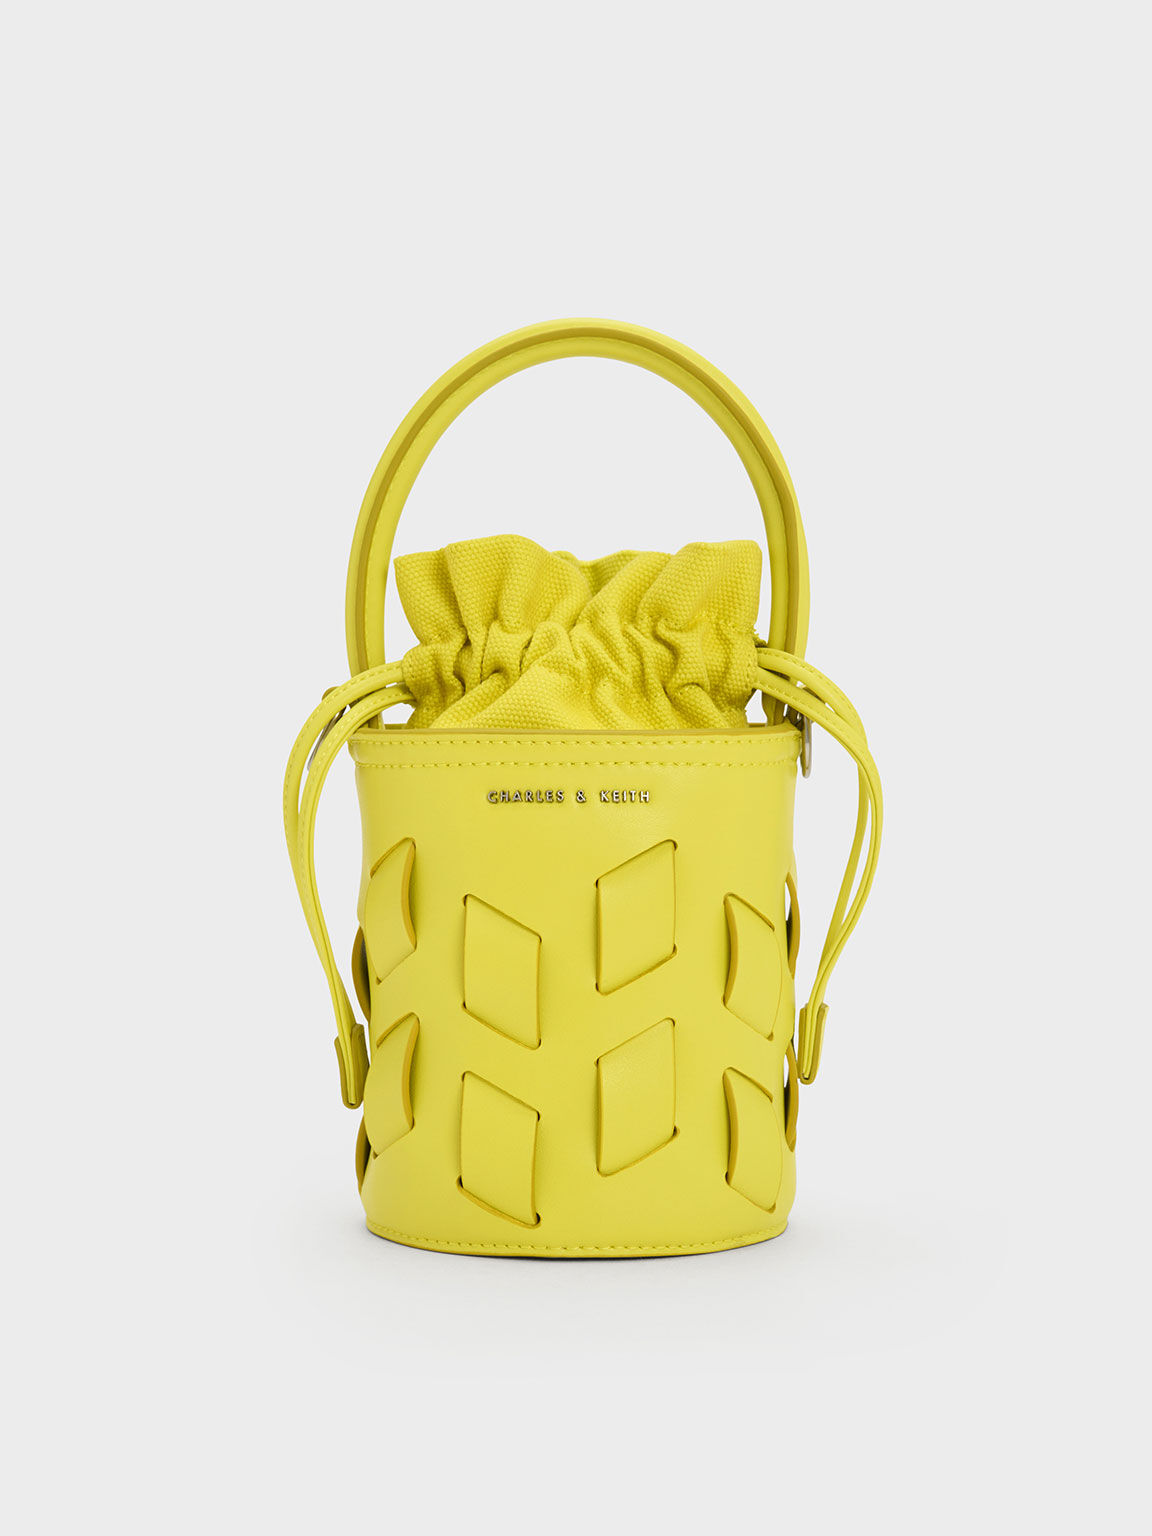 Figus Bucket leather yellow | Figus Designer